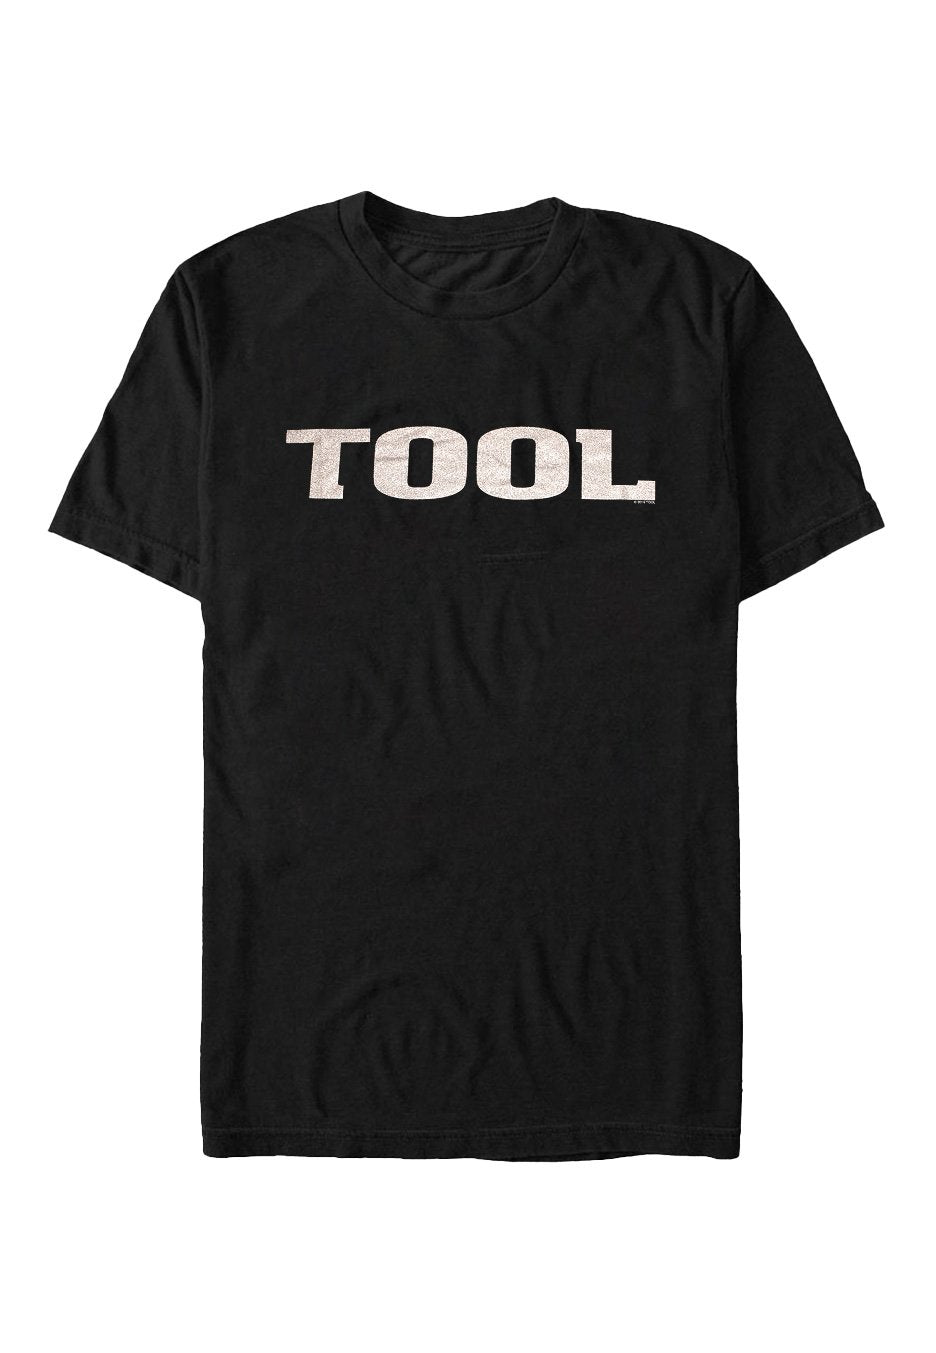 Tool - Metallic Silver Logo (Sleeve Print) - T-Shirt